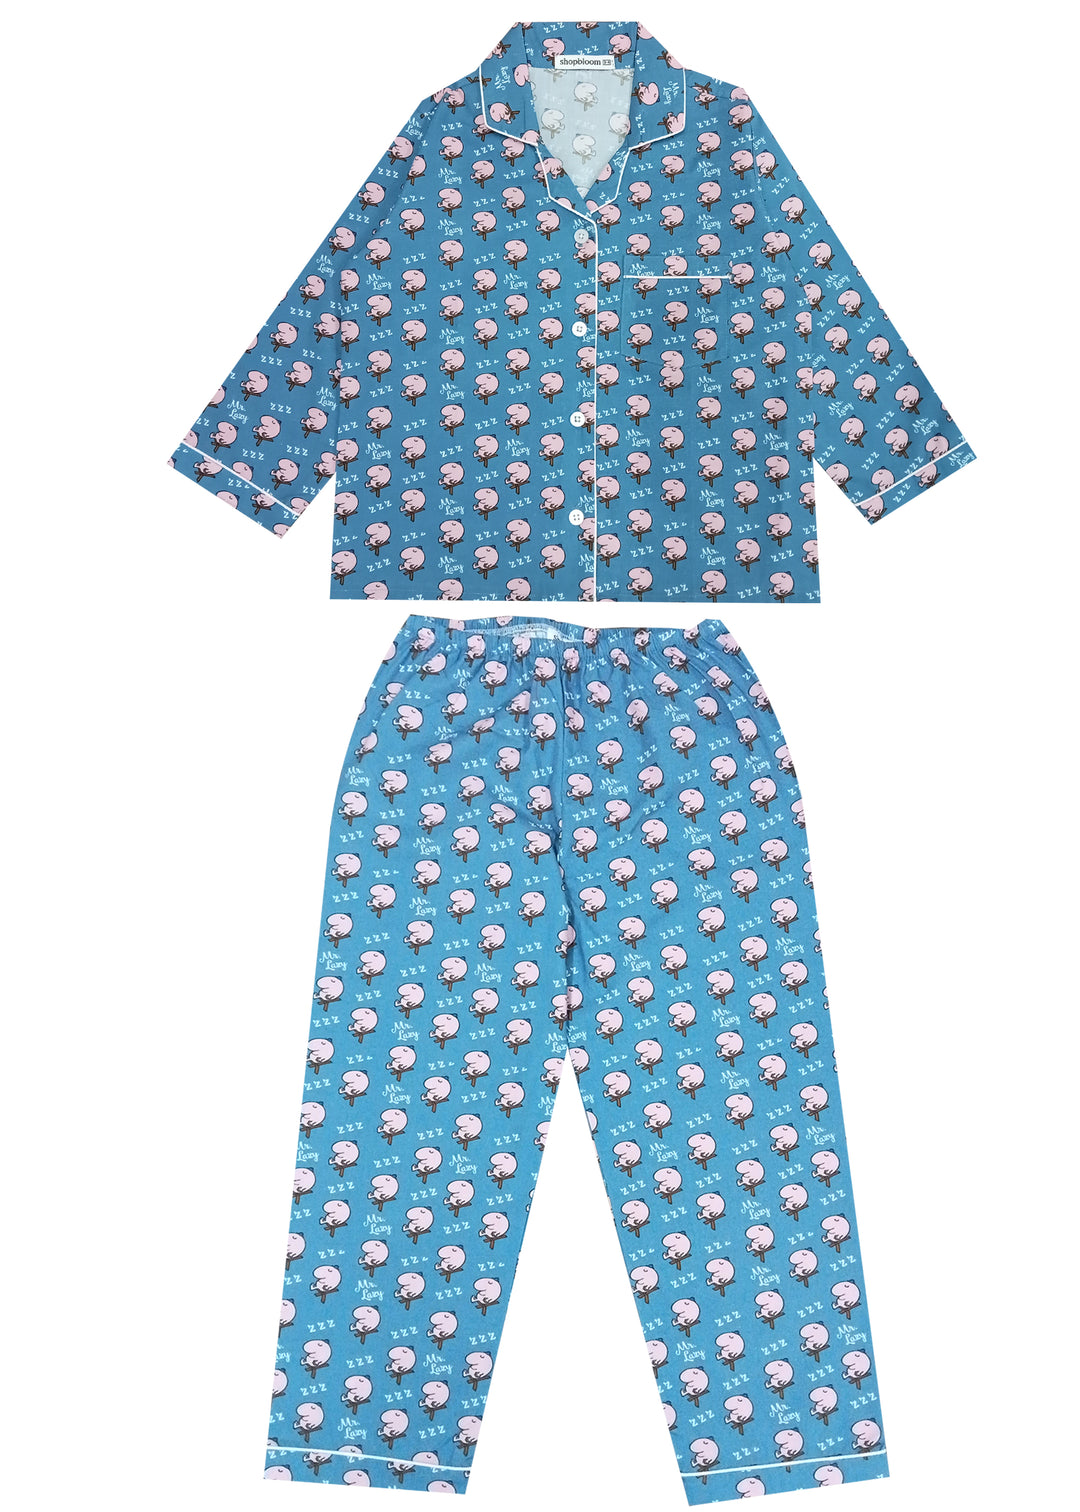 Mr Lazy Print Long Sleeve Kids Night Suit